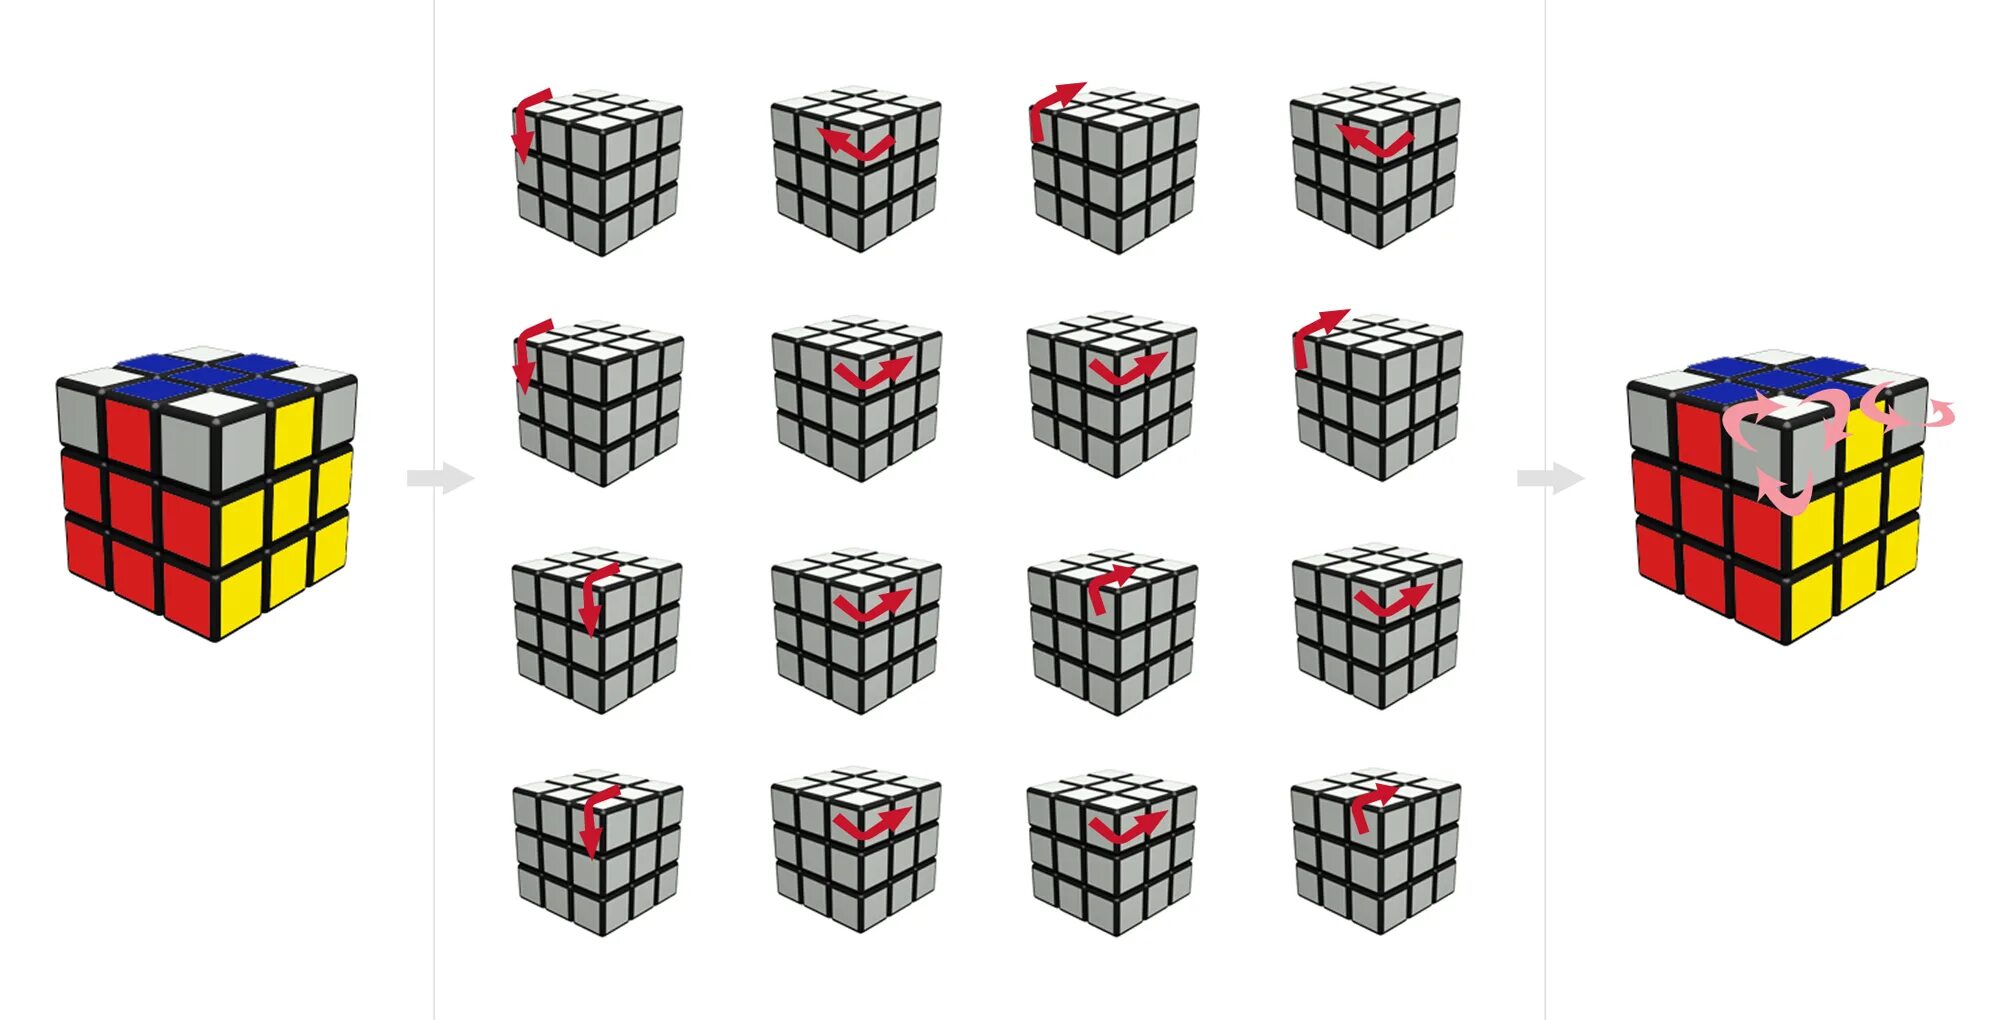 Rubiks Cube 3x3. Кубик Рубика 3х3. Кубик рубик 3х3 териш. Формула кубика Рубика 3x3. Как сложить рубик